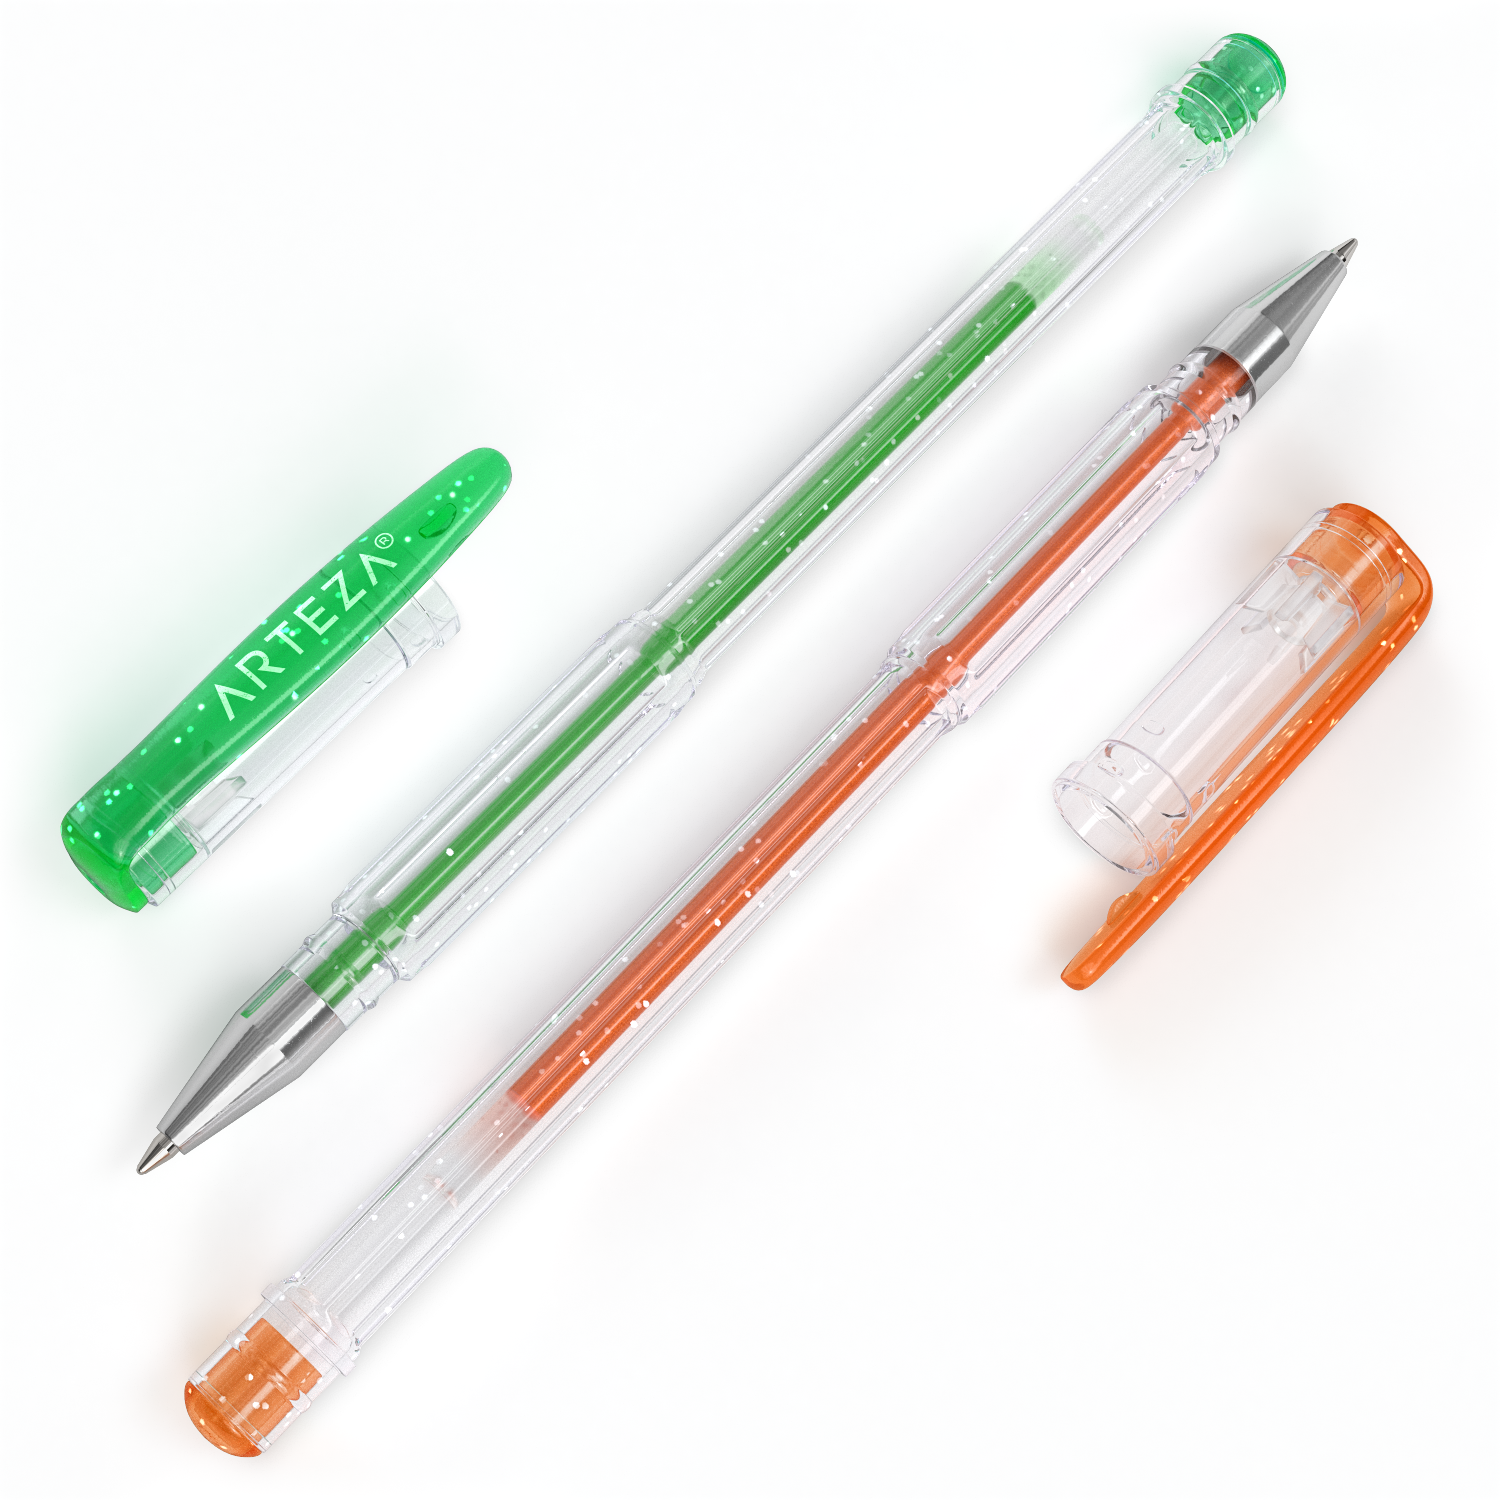 Gel Ink Pens, Glitter - Set of 14 –